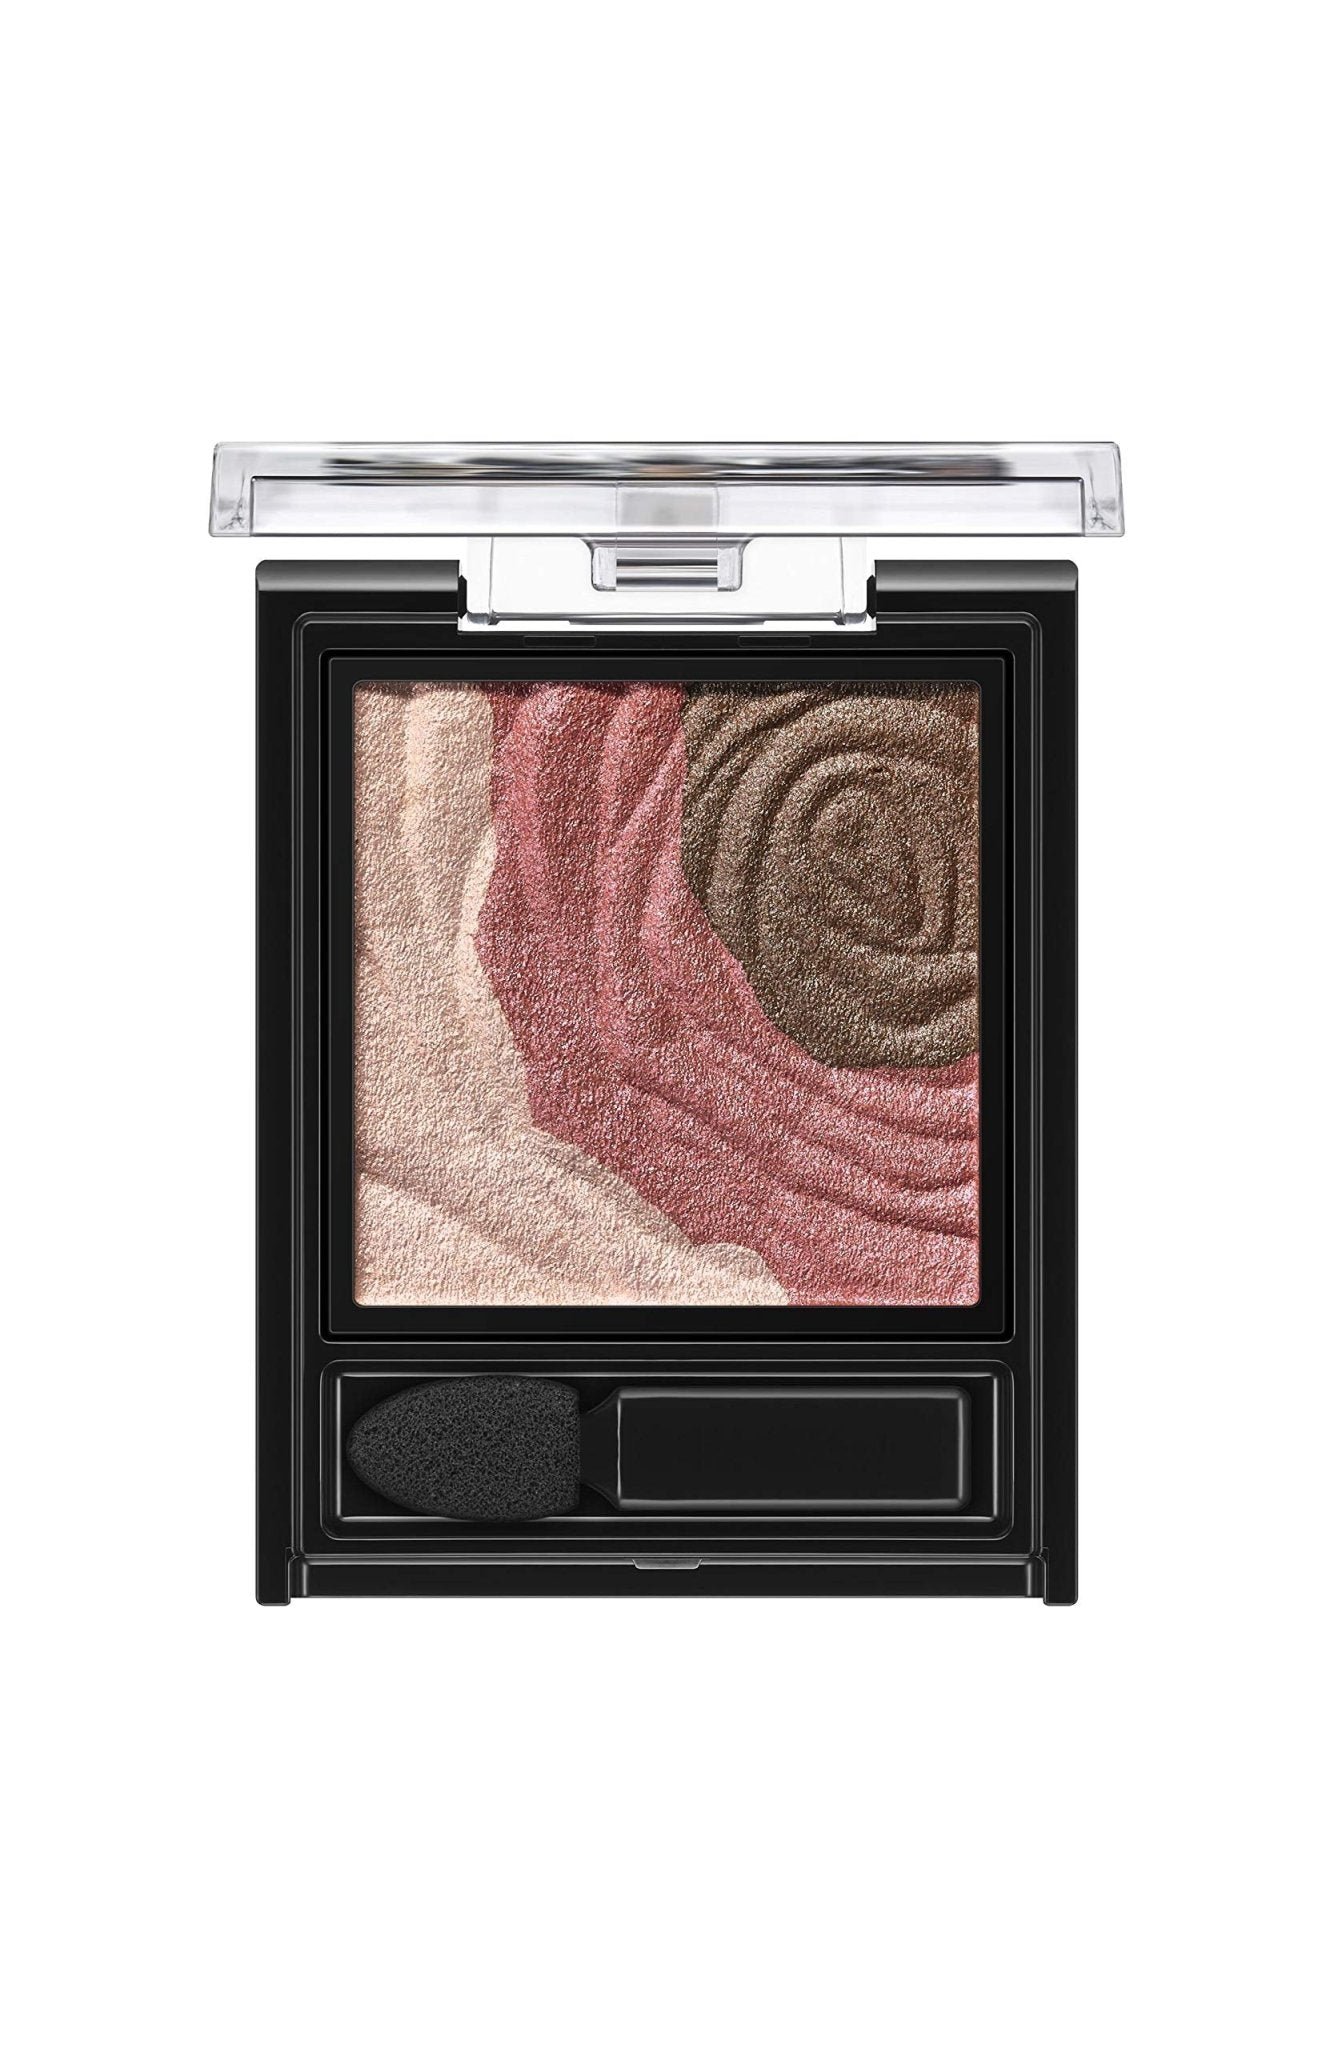 Kate Dark Rose Eyeshadow Pink PK - 1 2.3g - Discontinued Manufacturer Product